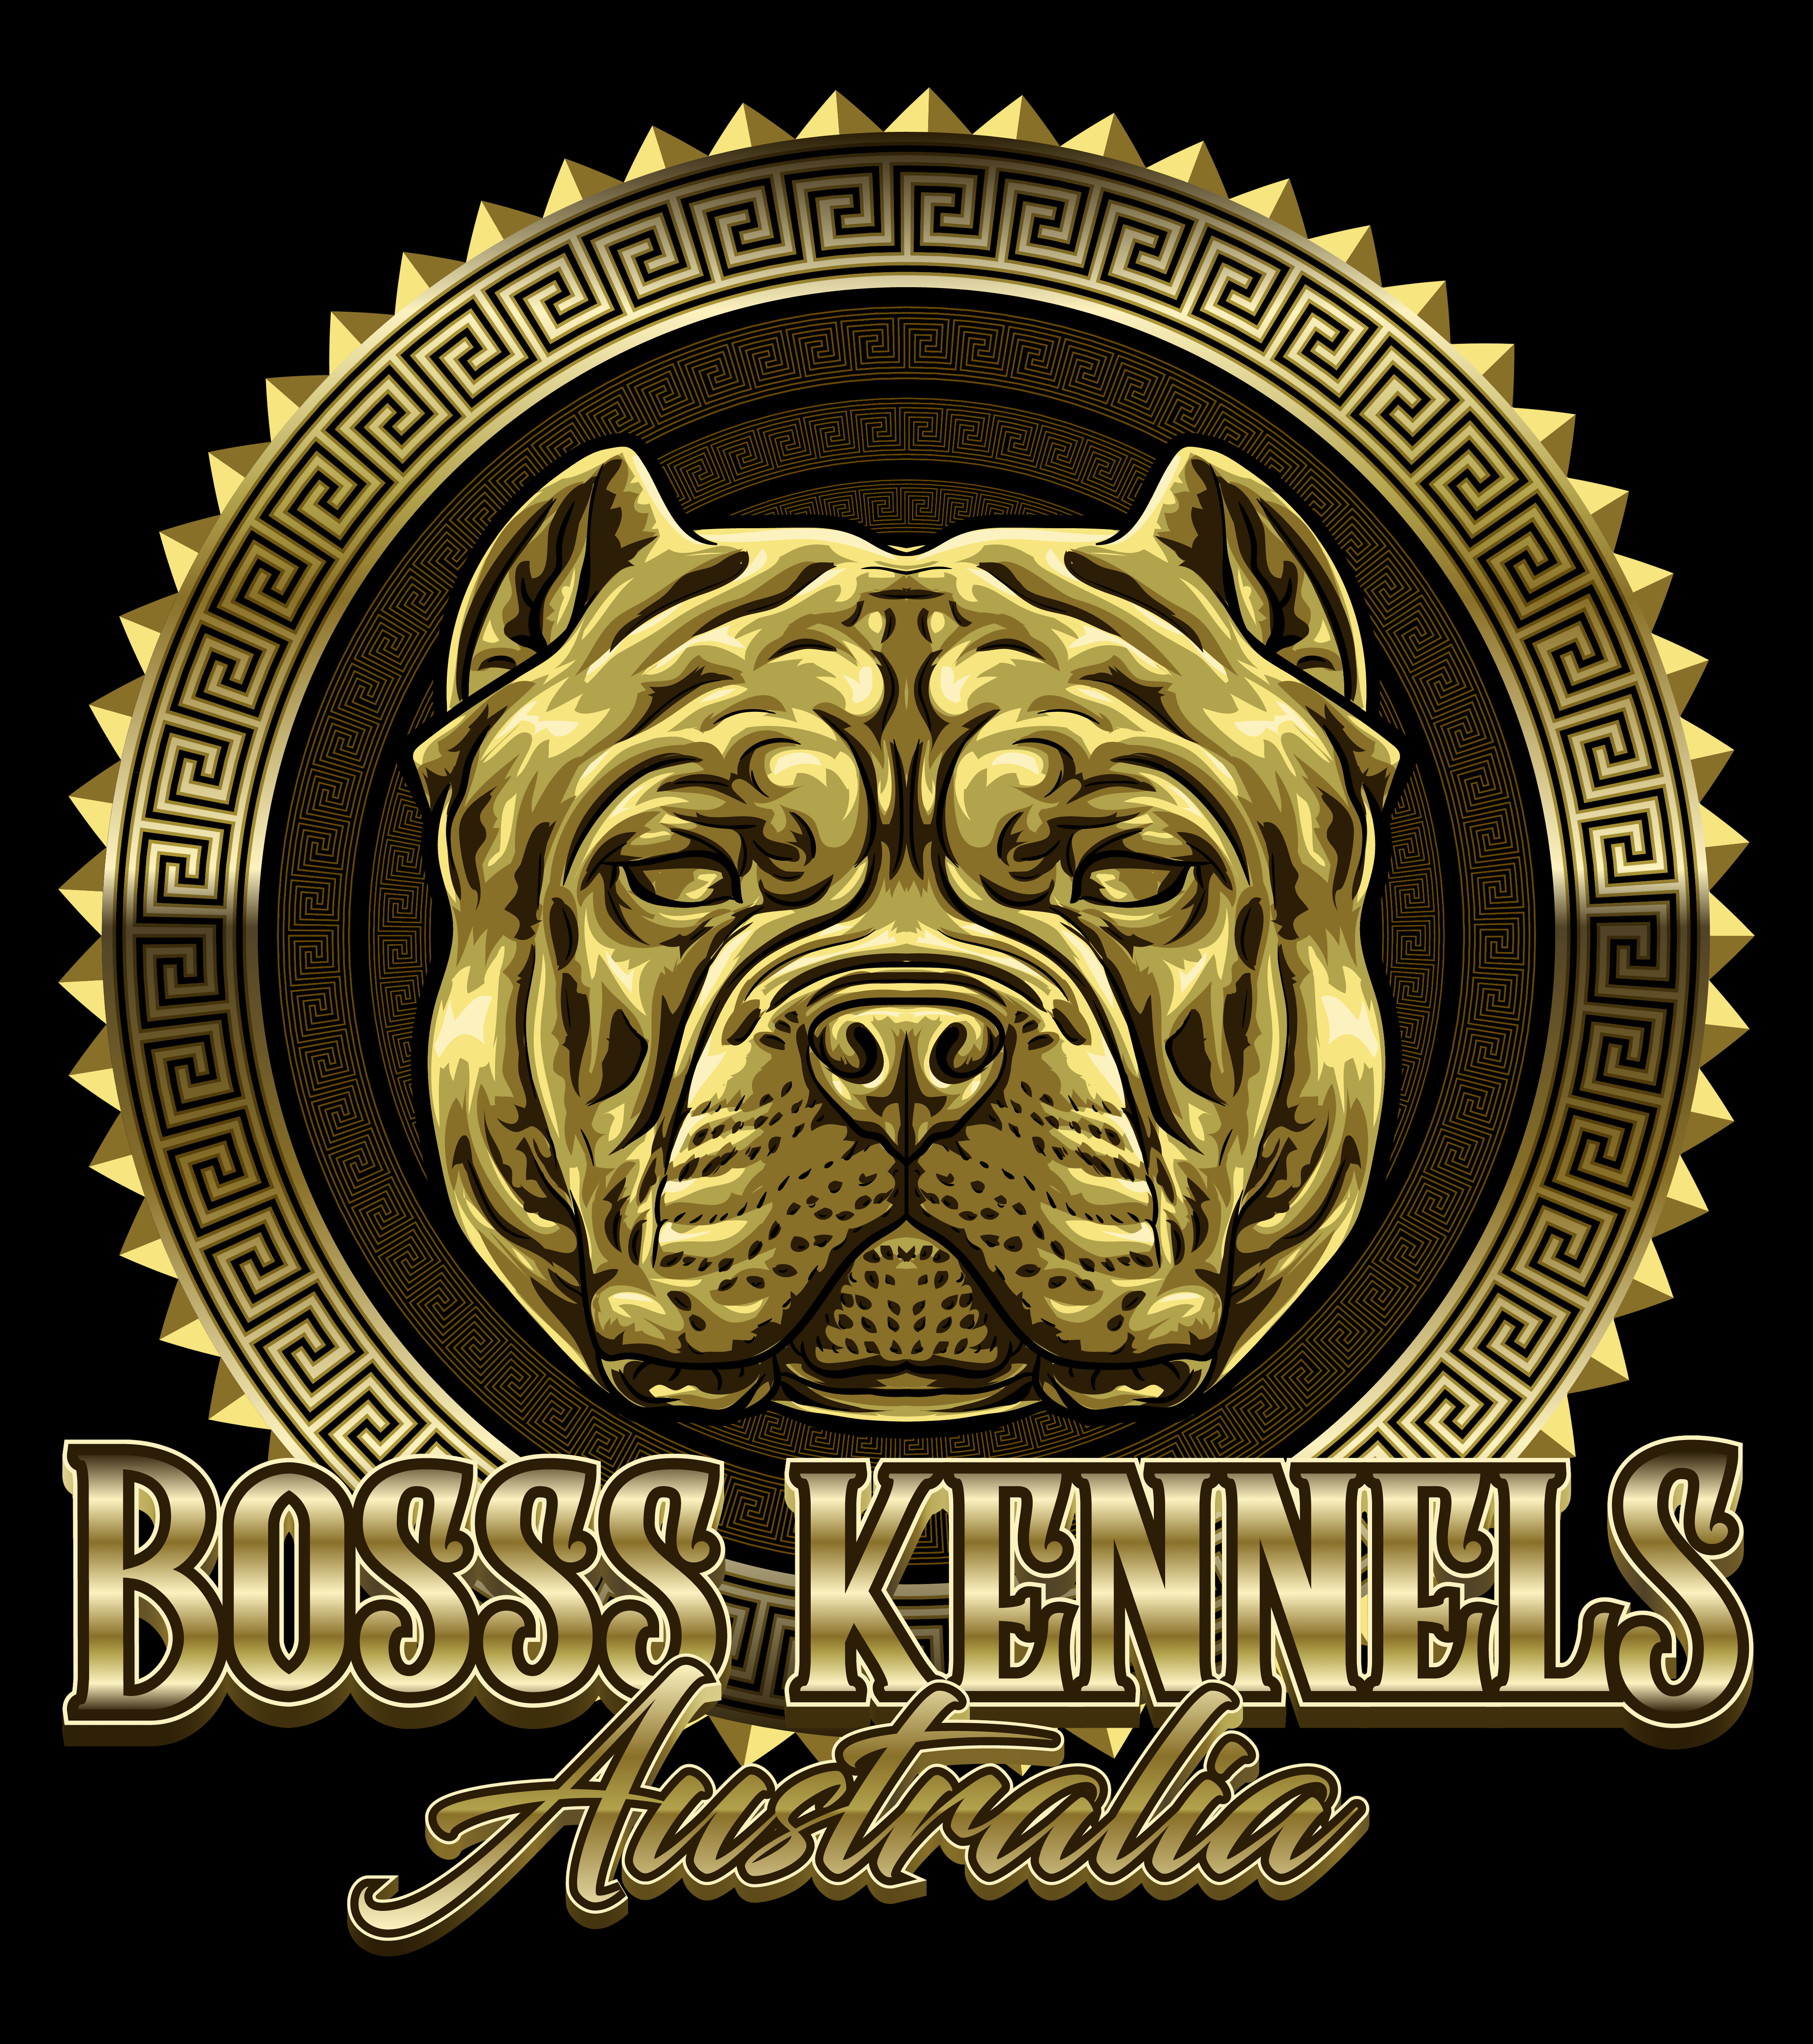 Bosss Kennels Australia